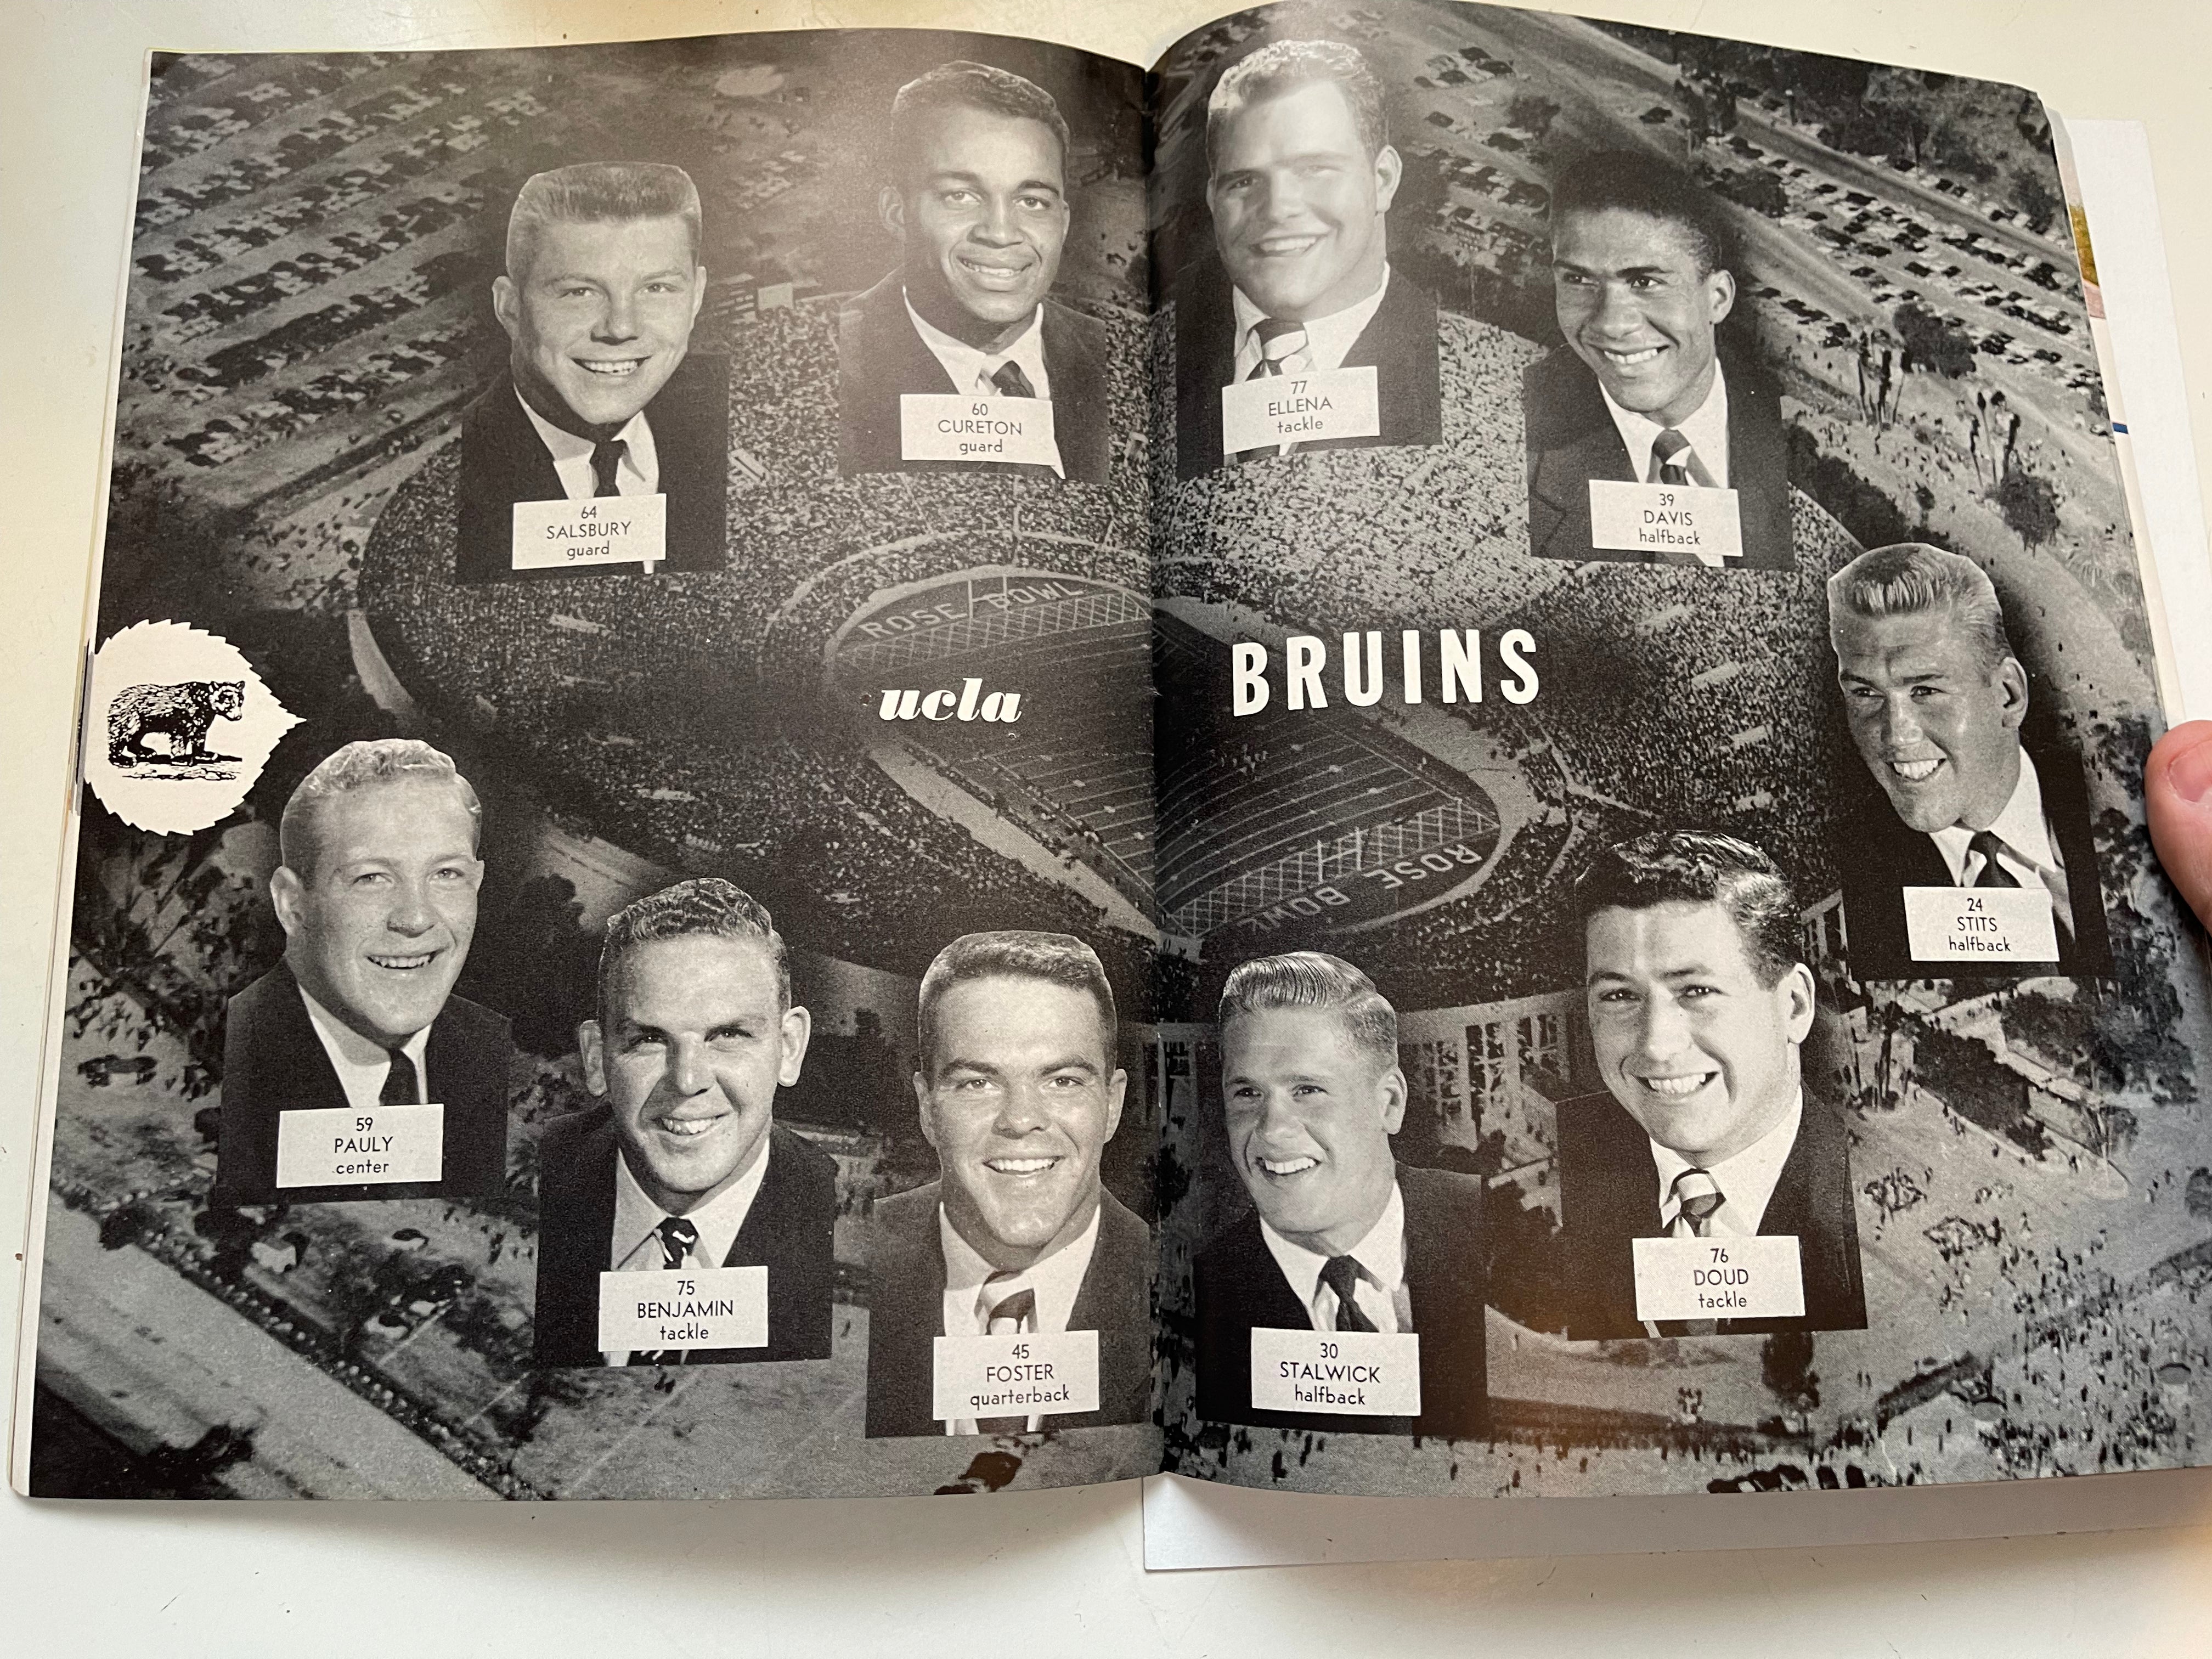 1954 Rose Bowl Michigan vs UCLA football game program